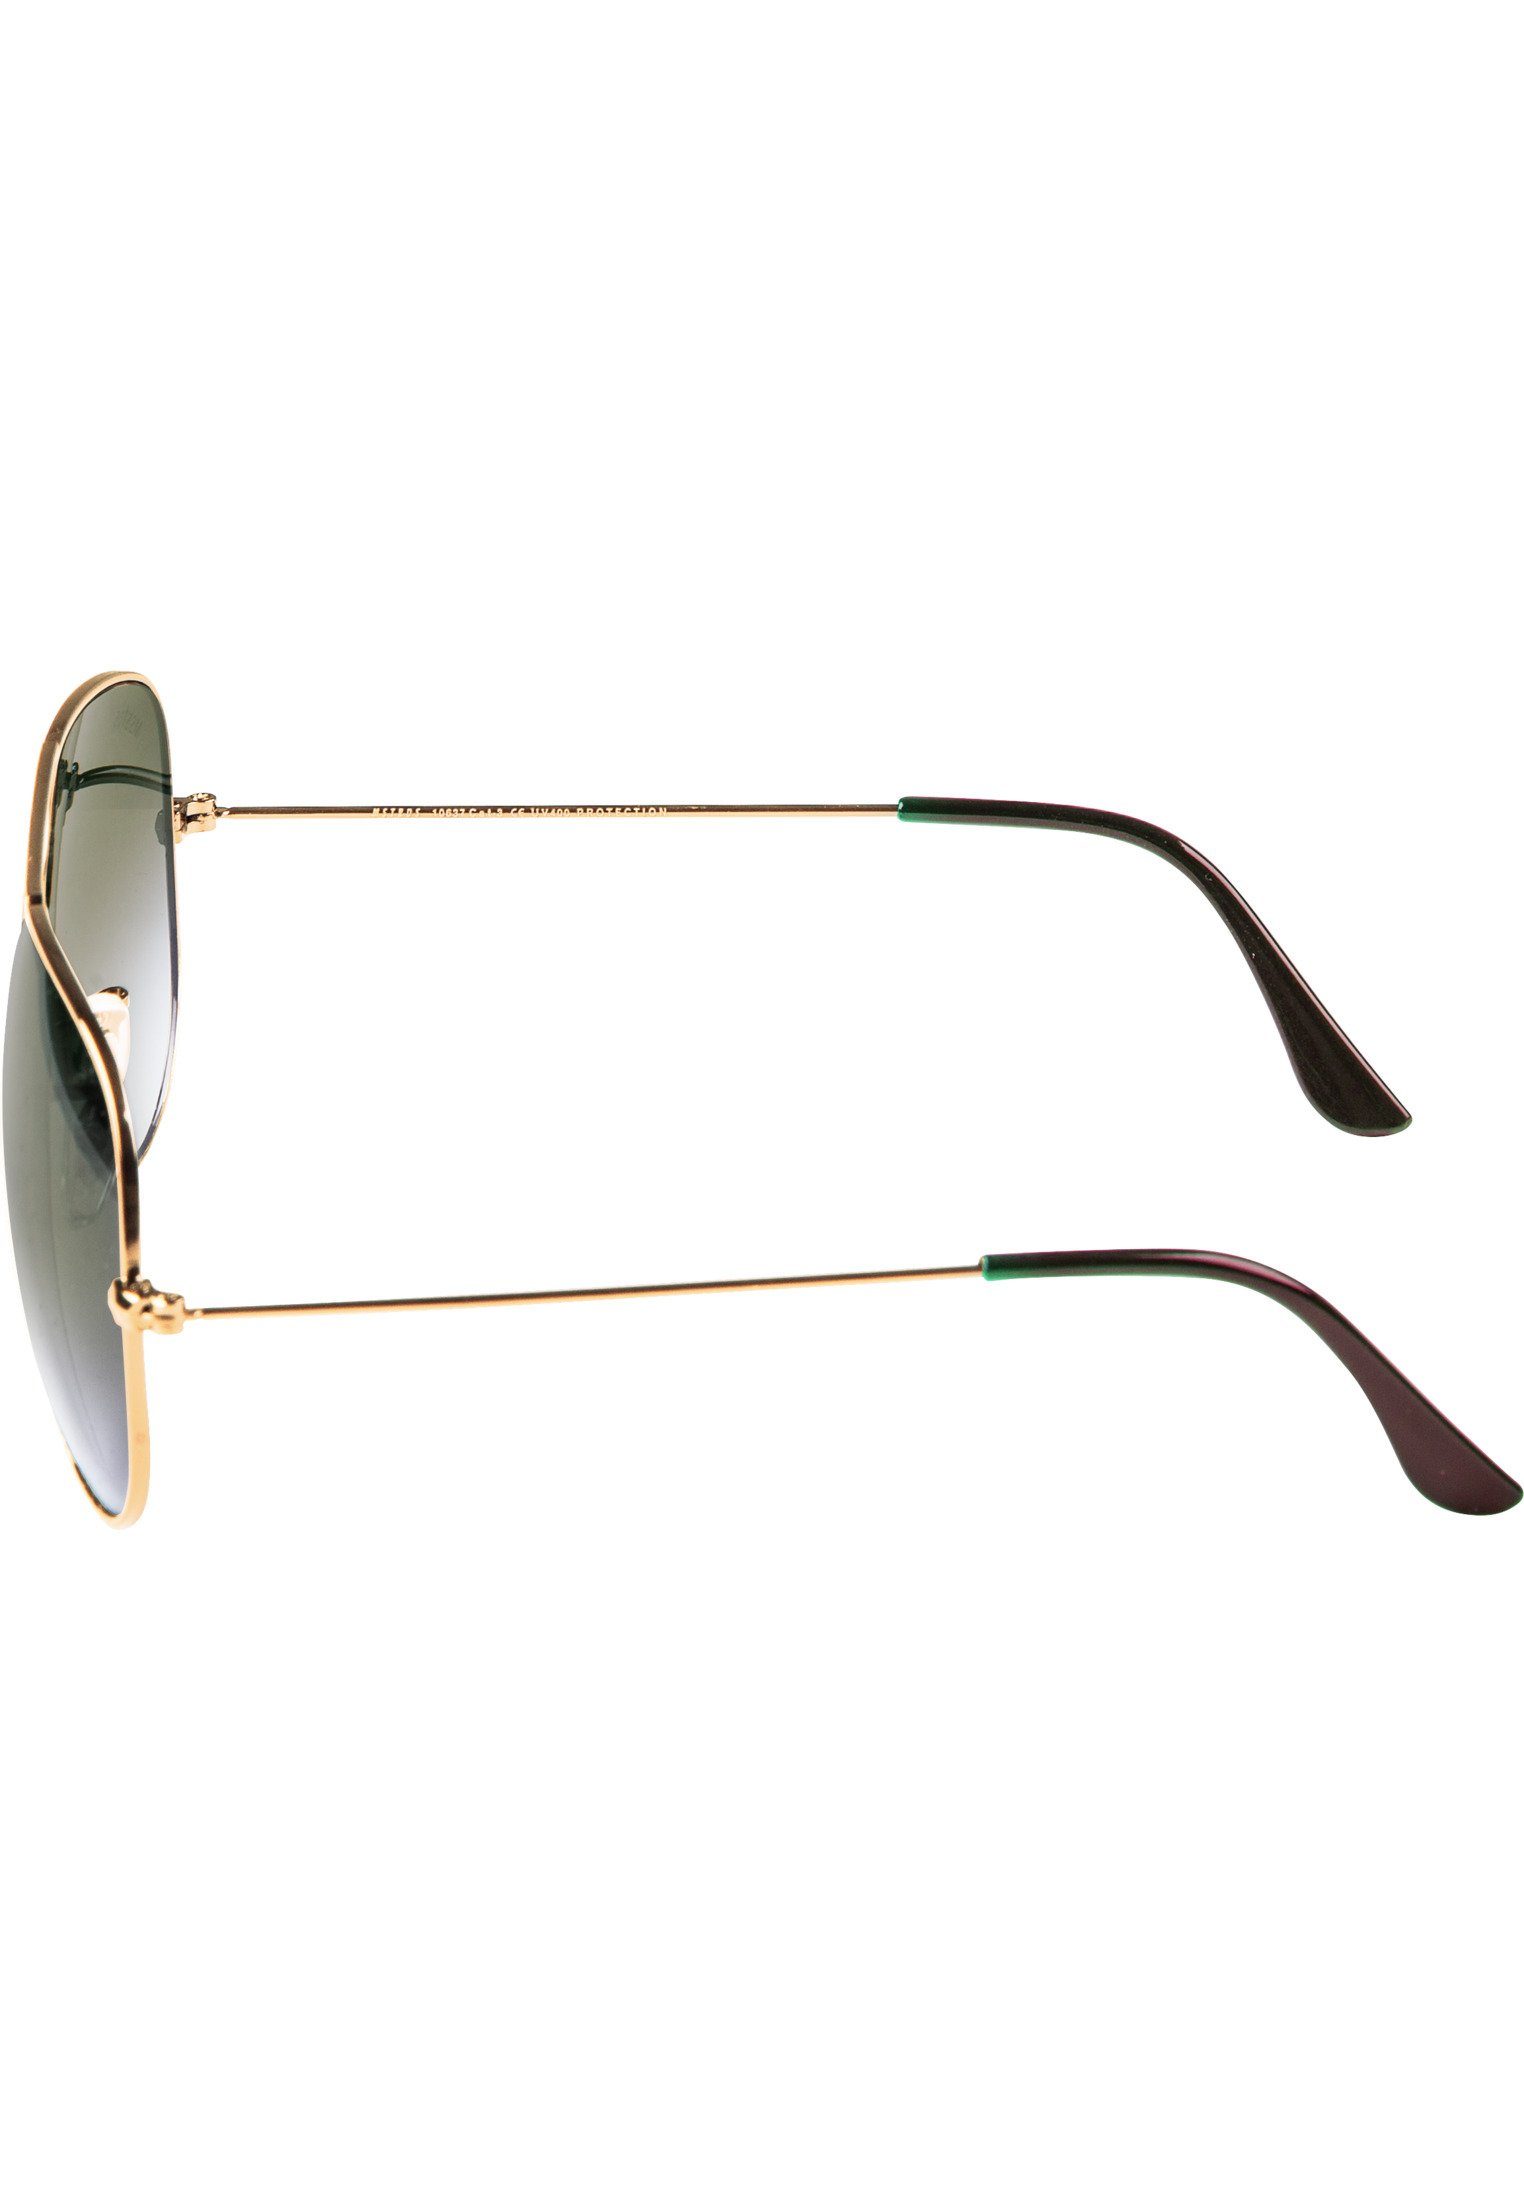 MSTRDS Sonnenbrille Accessoires gold/brown Sunglasses PureAv